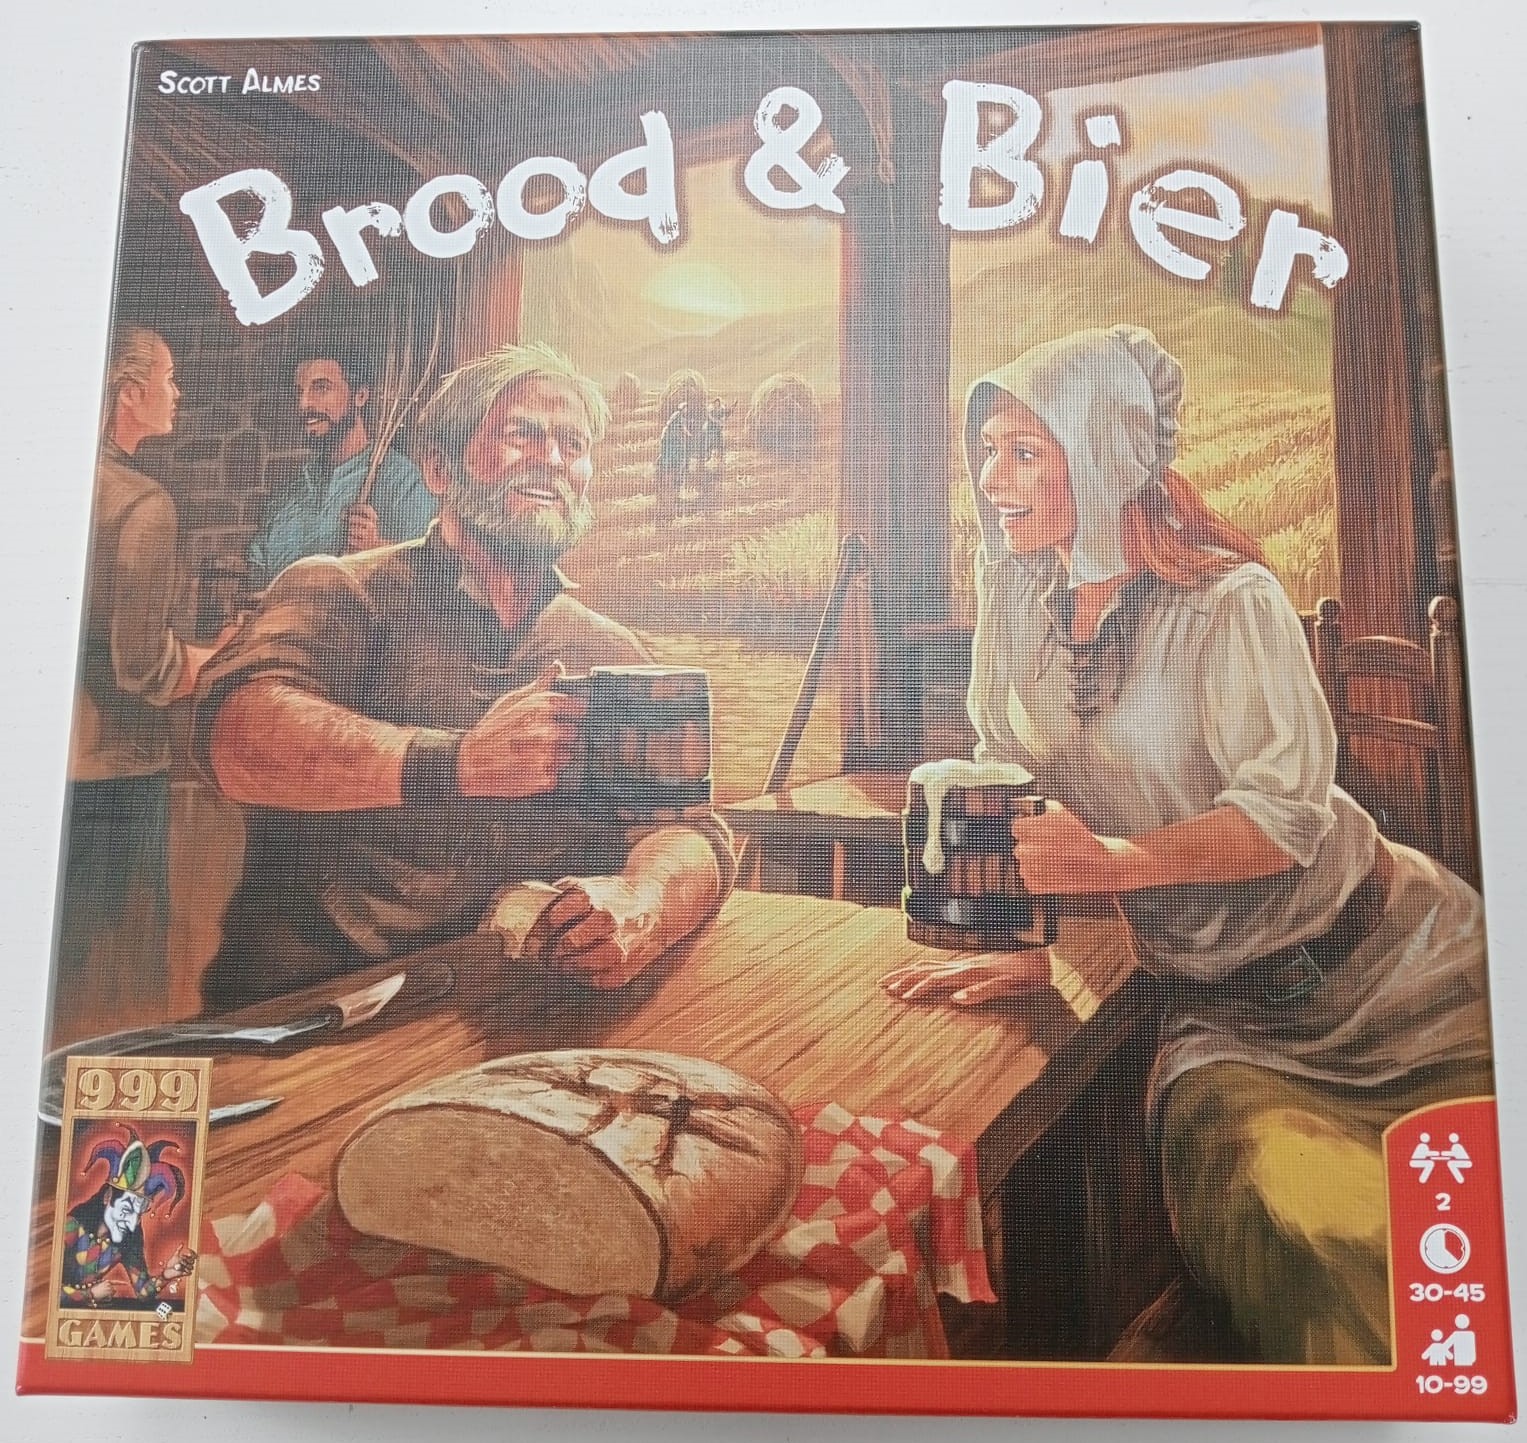 Brood & Bier